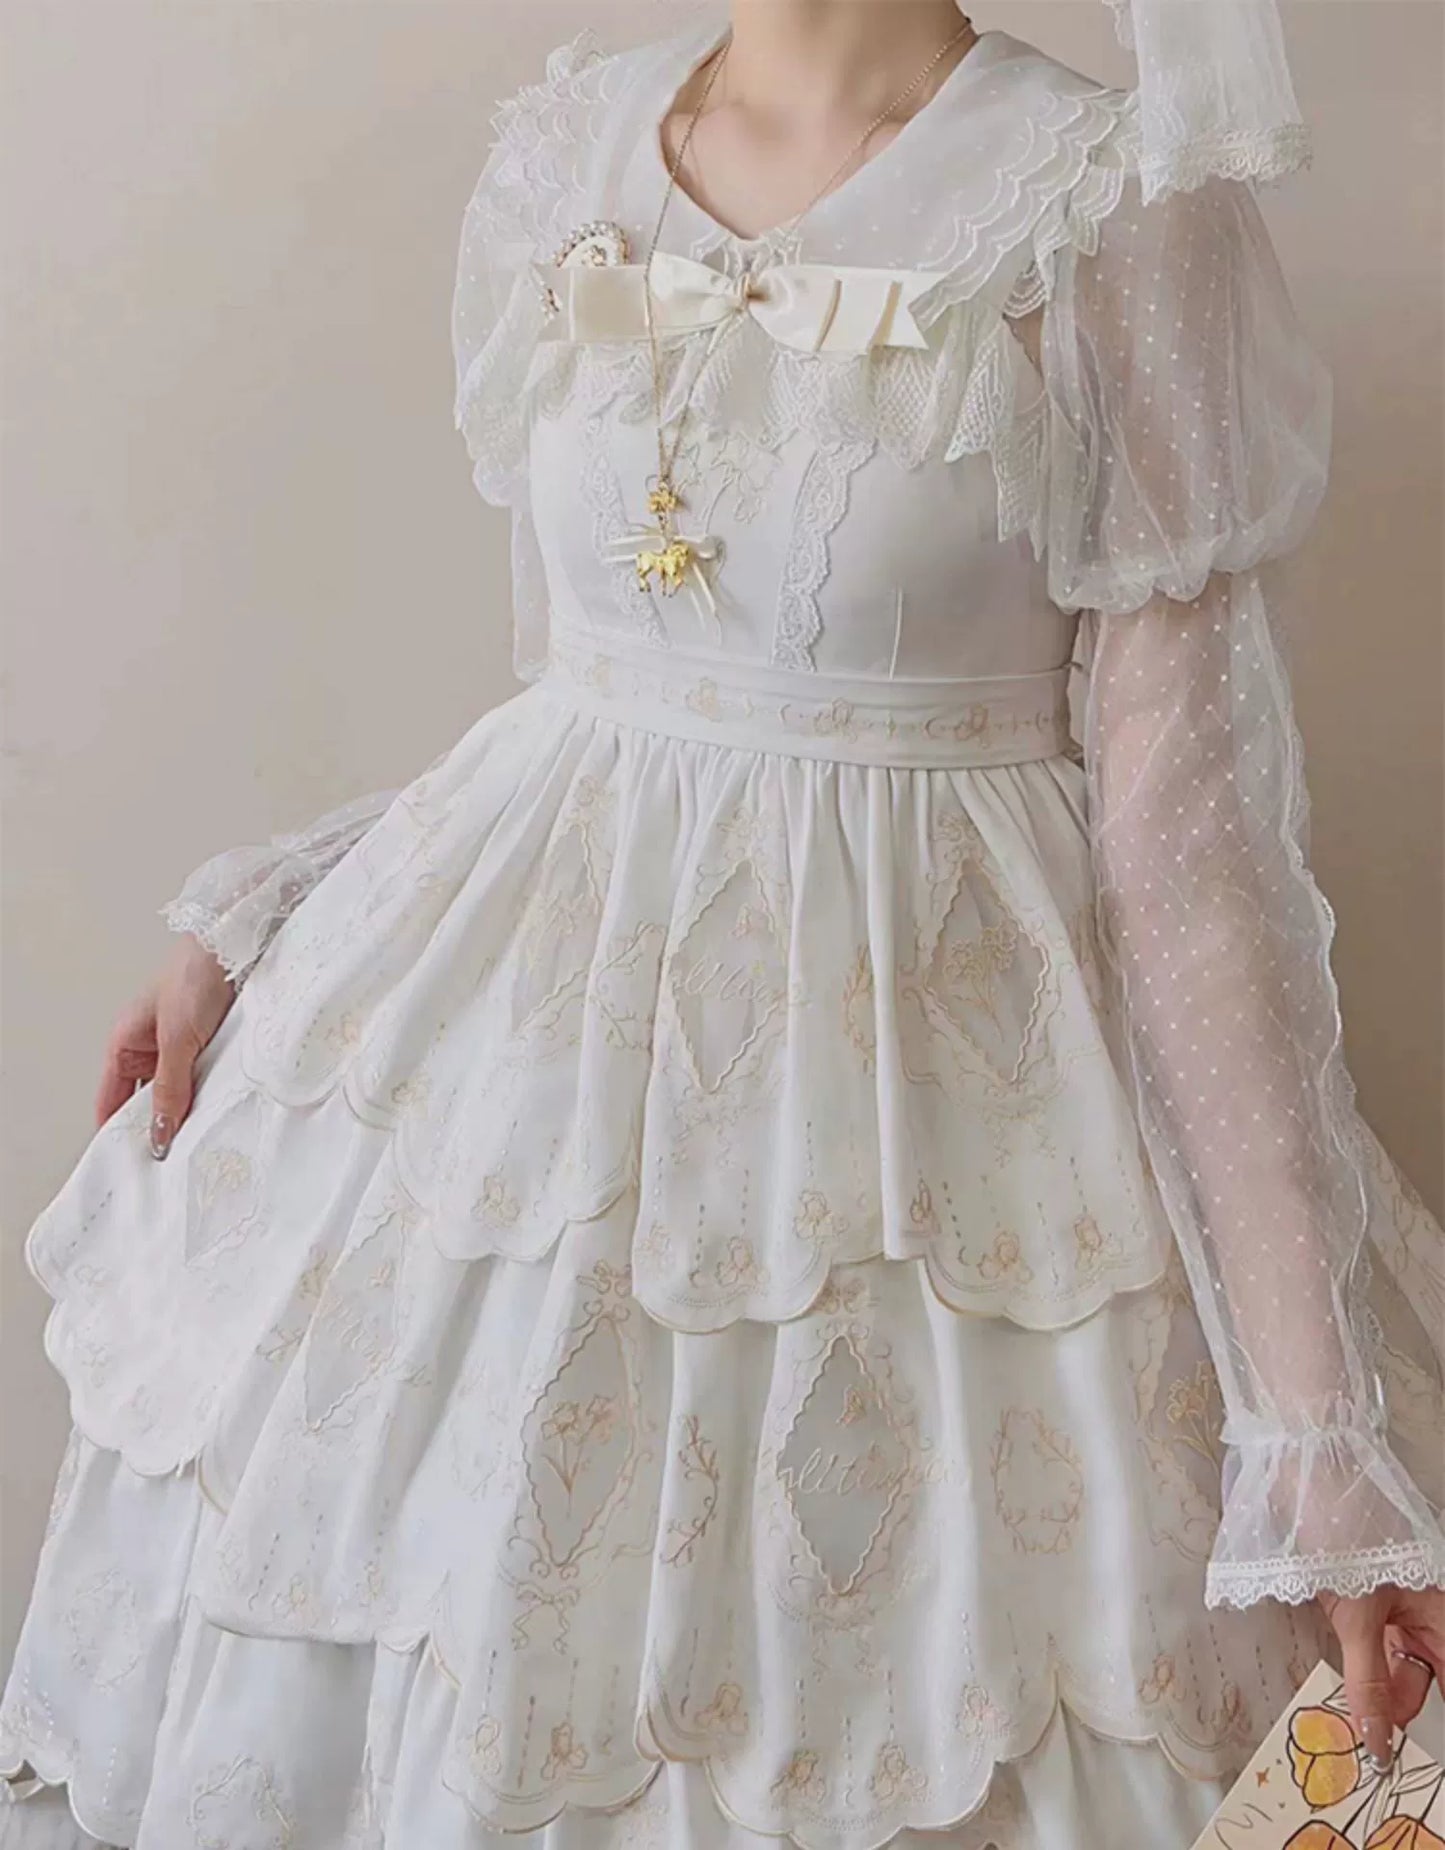 White Iris Moonlight iris embroidery jumper skirt